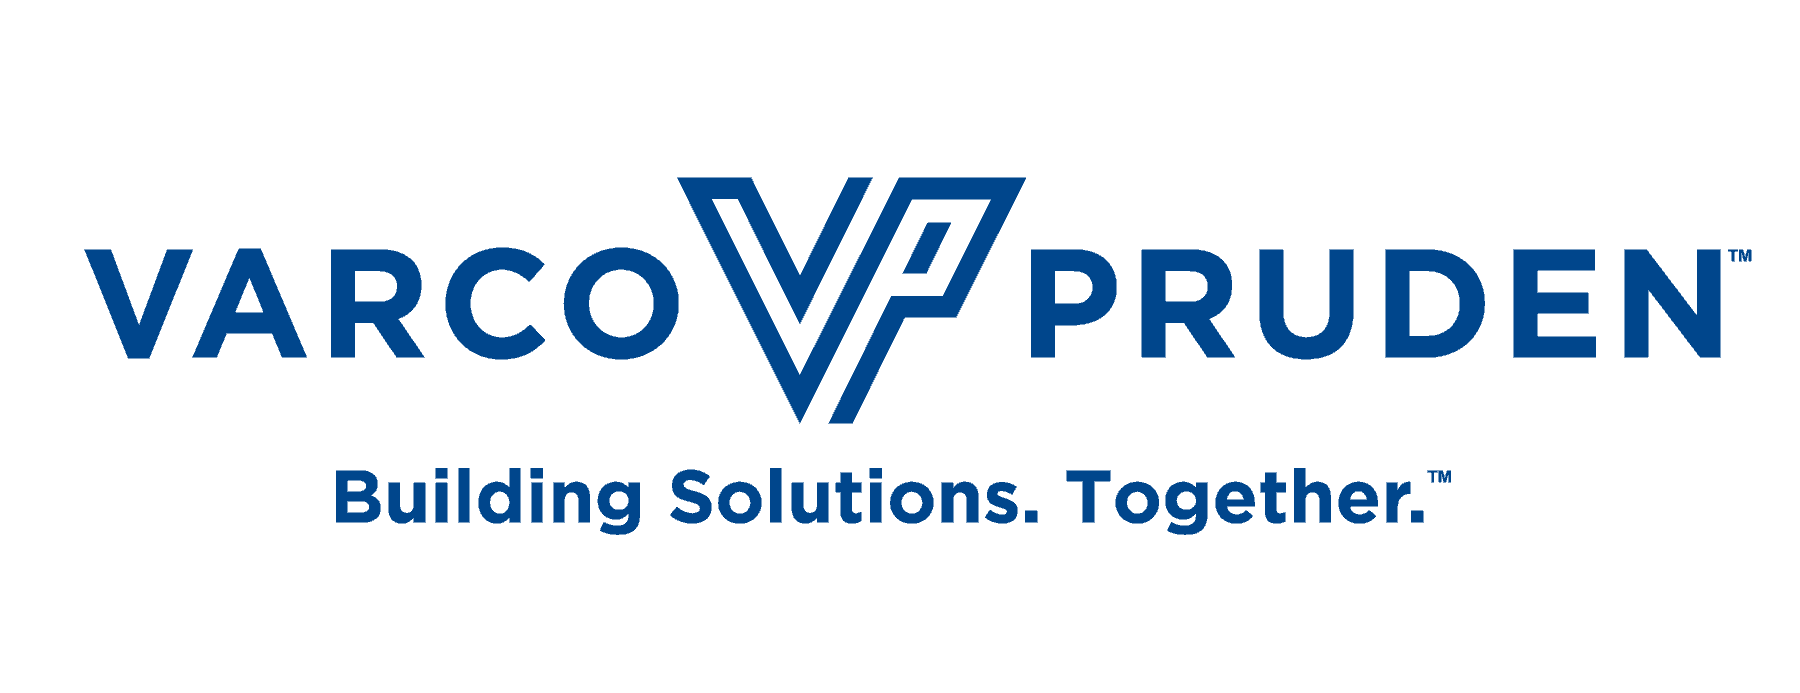 Blue Varco Pruden Logo with Building Solutions. Together. Tagline